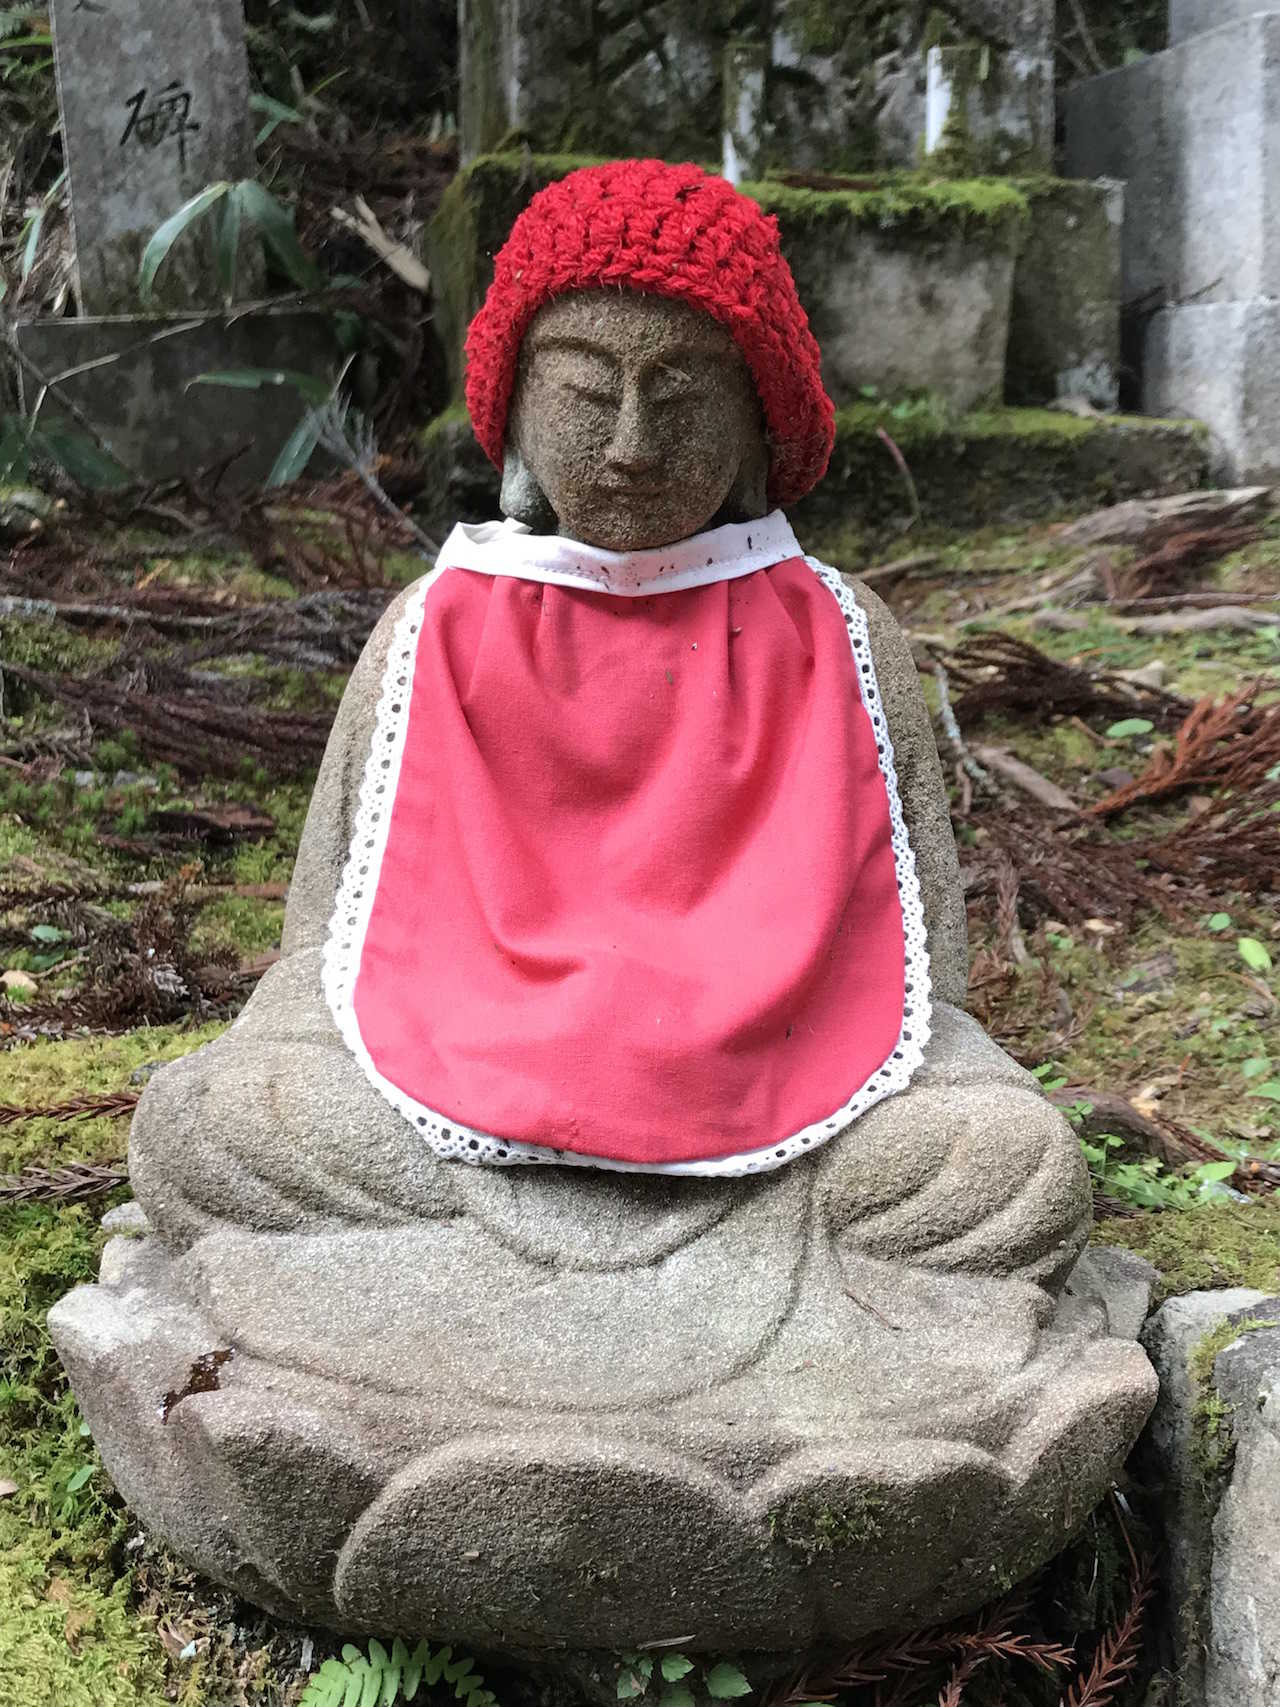 Jizu statue - Koyasan